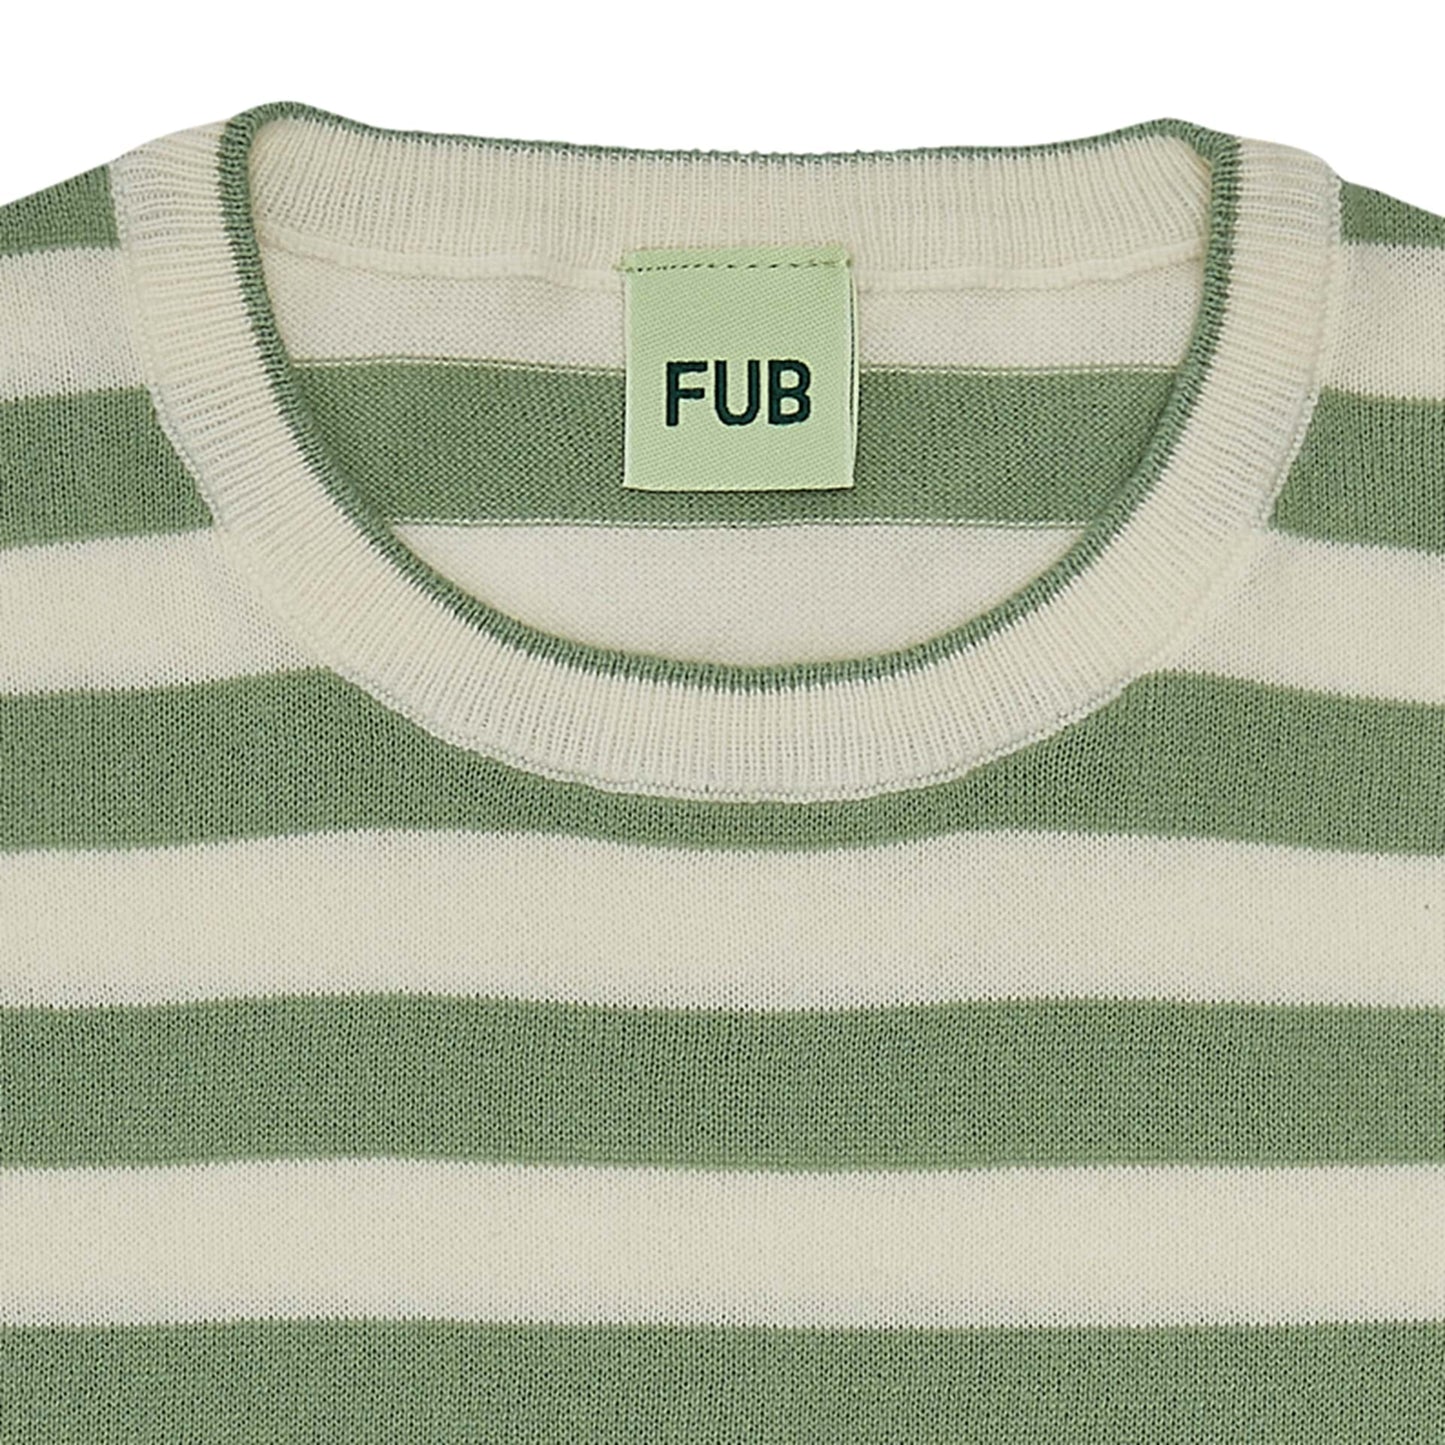 Fub T-Shirt, ecru/leaf